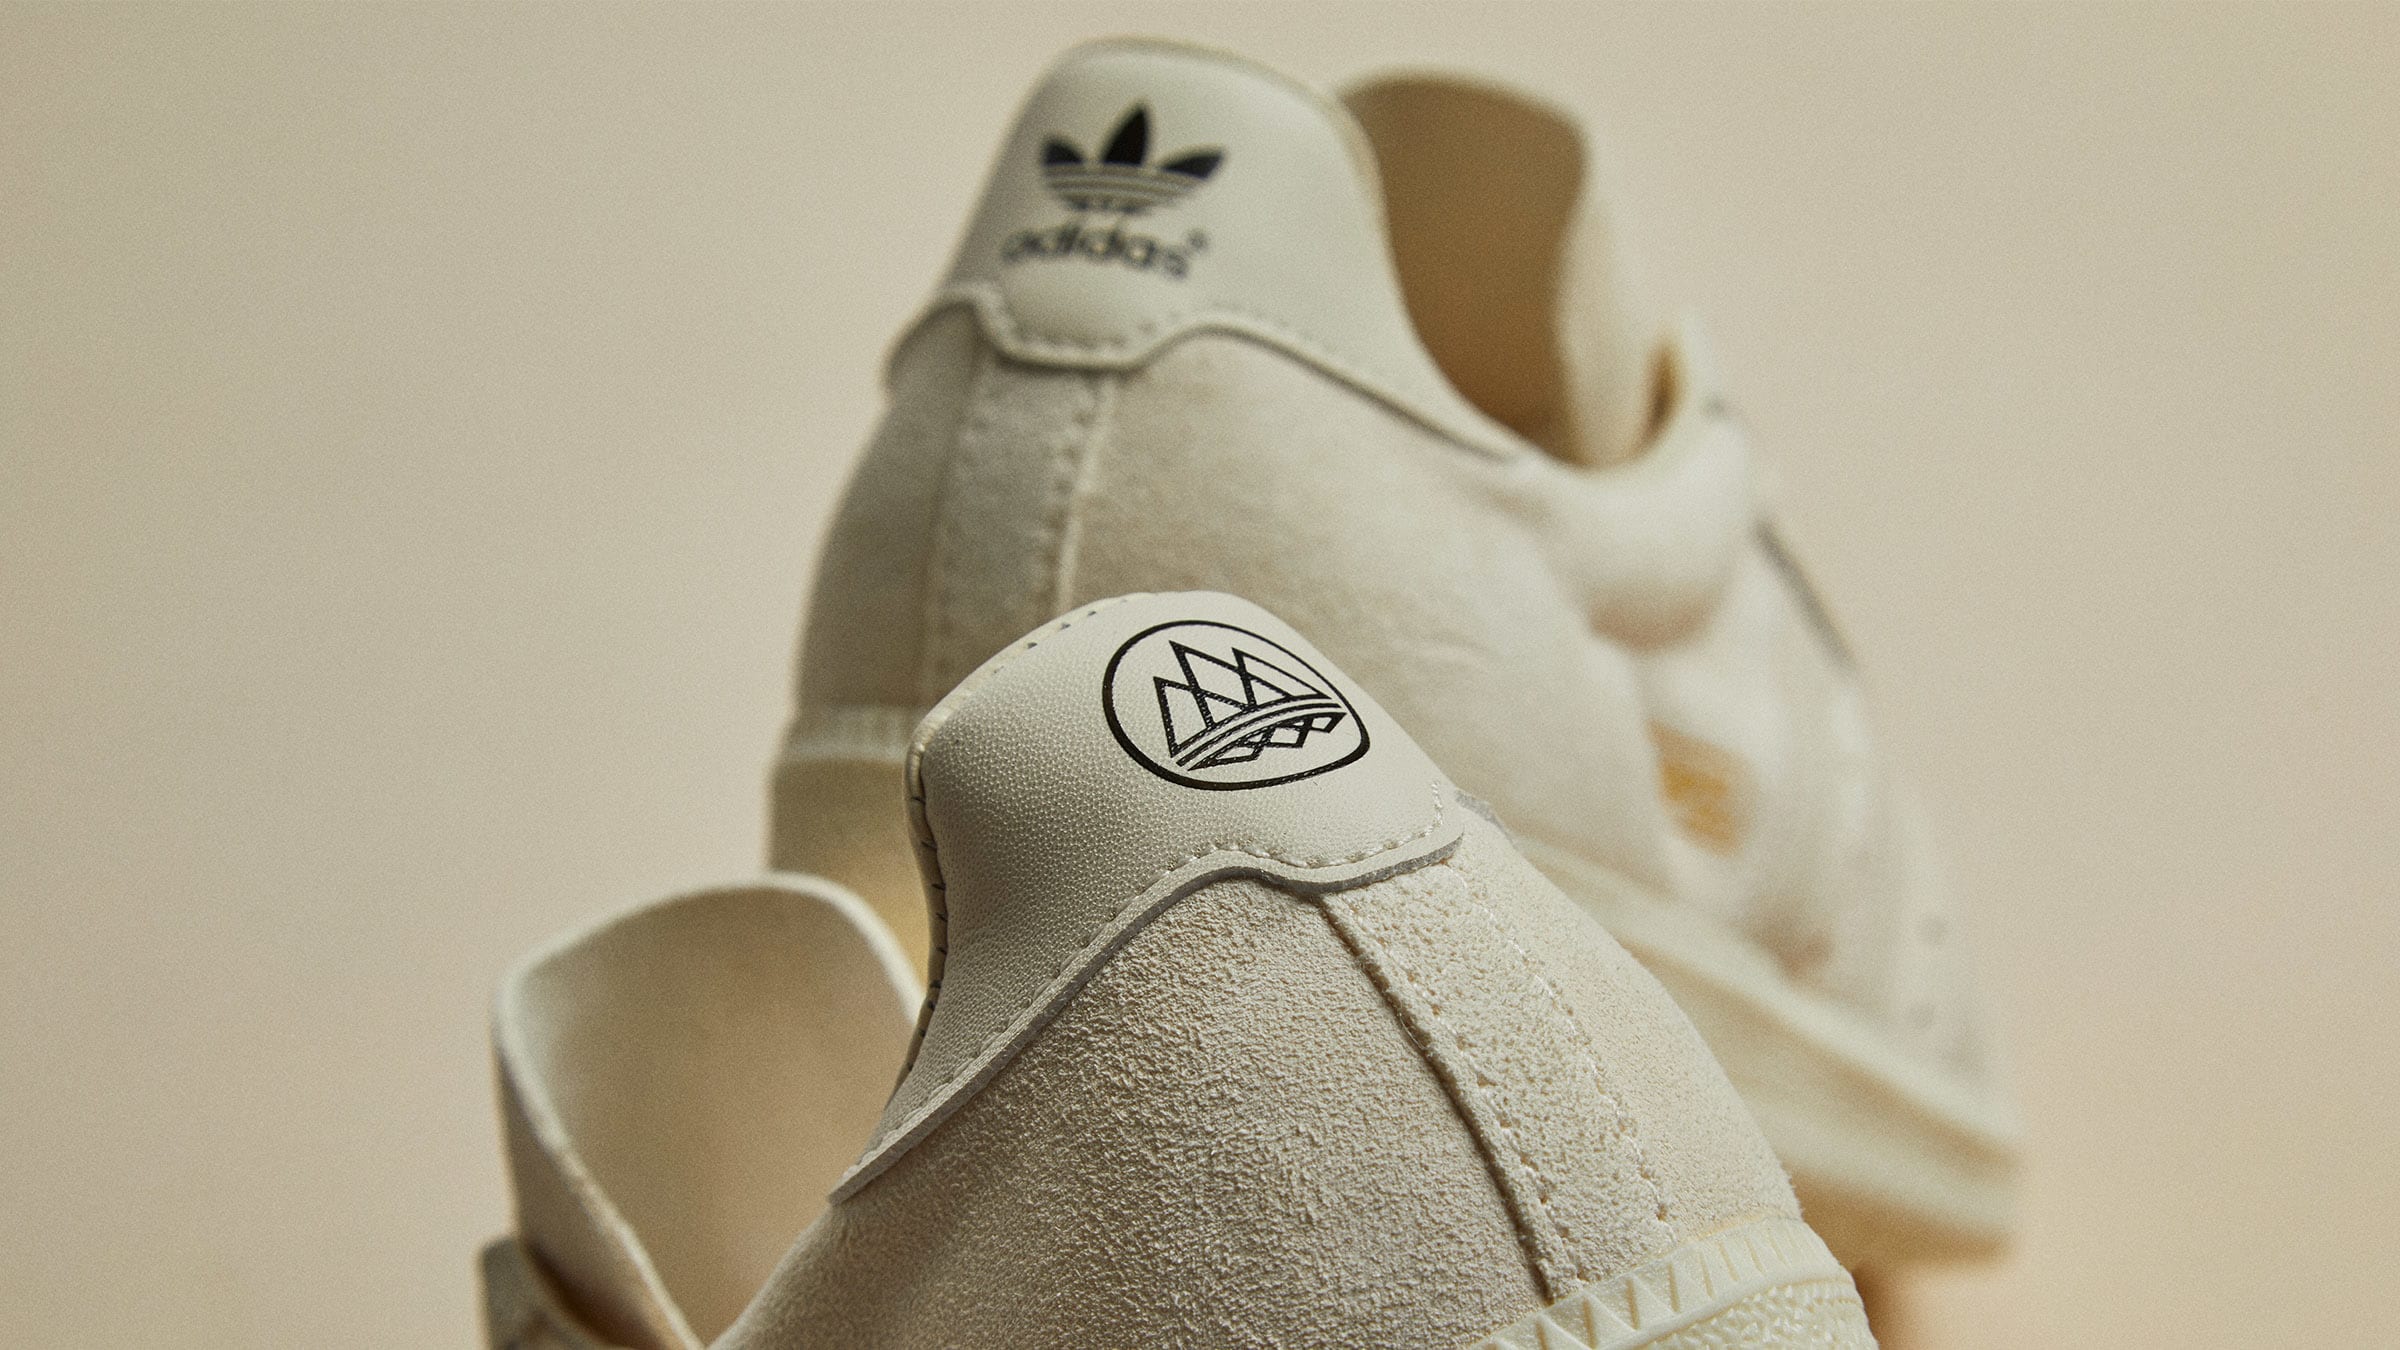 Adidas x Liam Gallagher Padiham SPZL (Cream White) | END. Launches